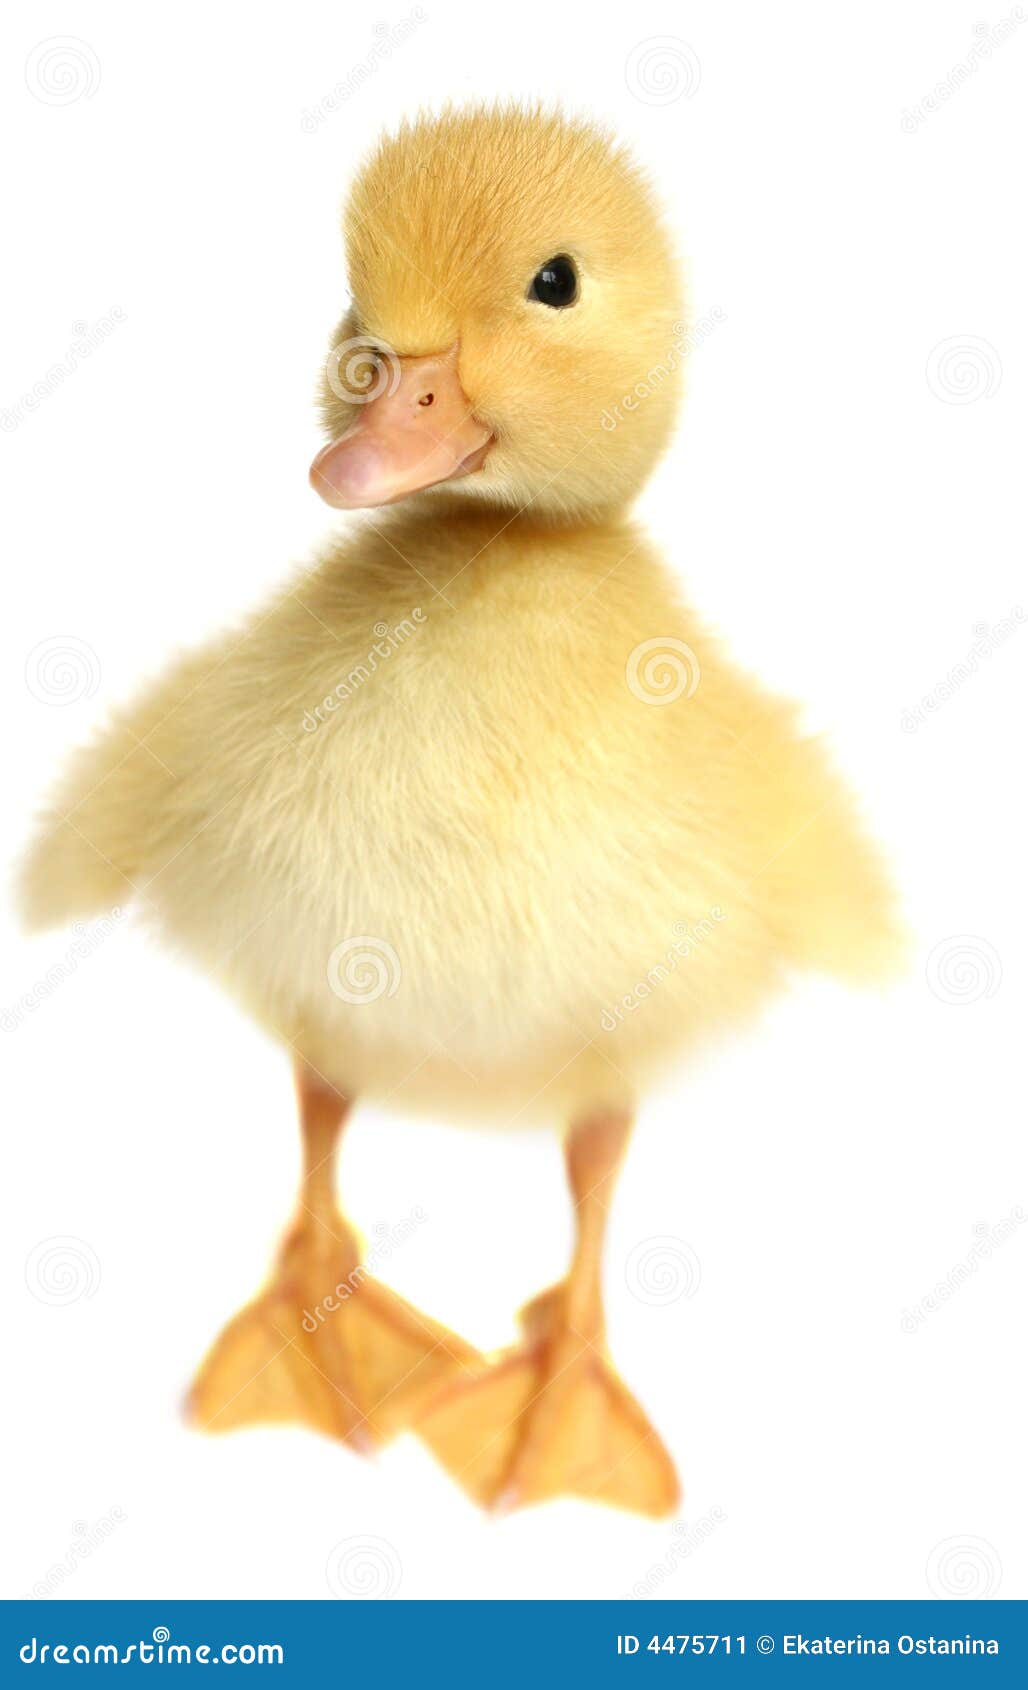 image stock gentil un petit canard jaune image